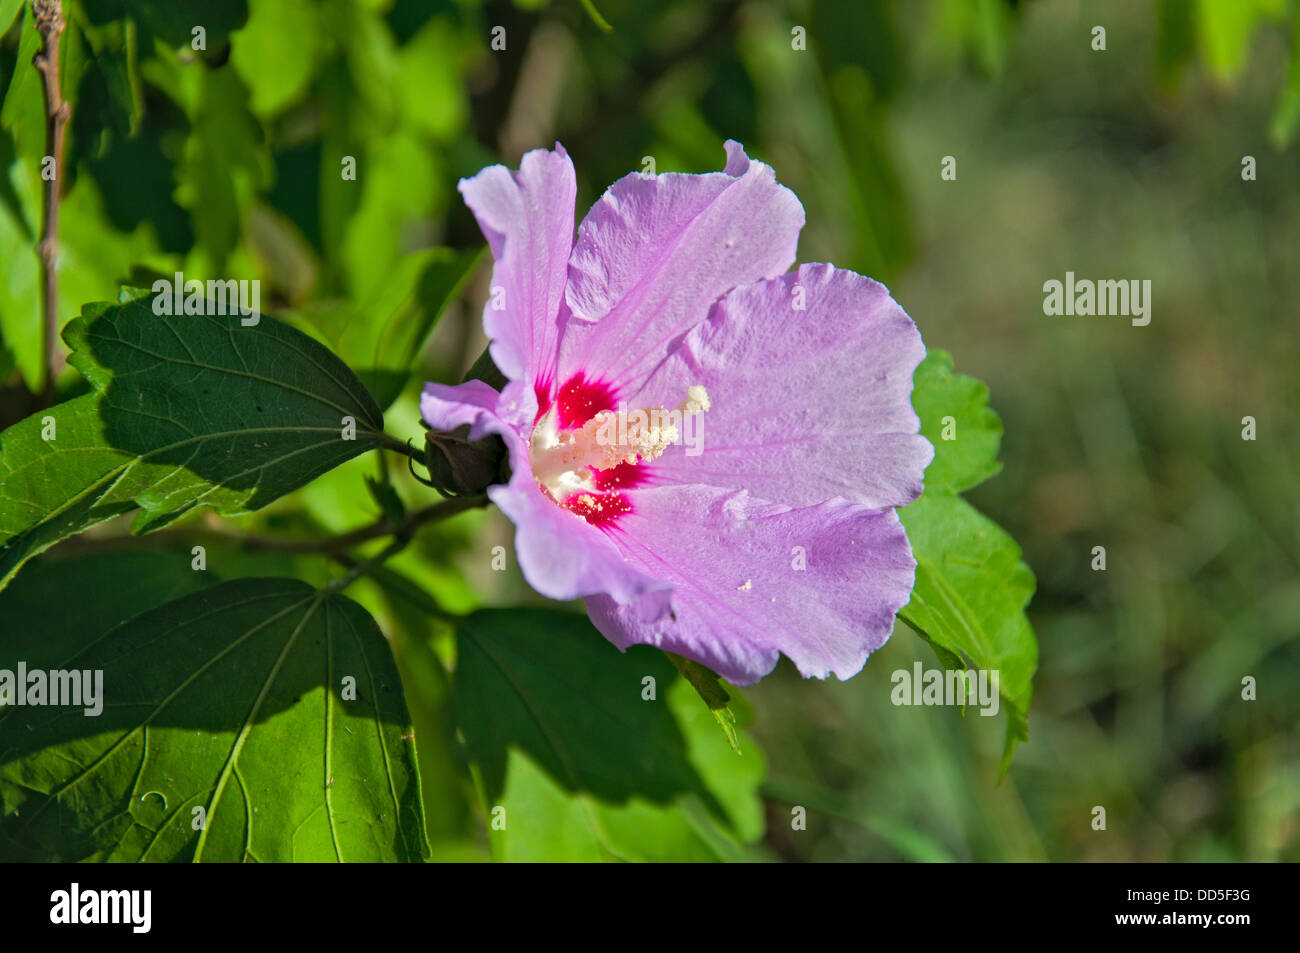 Malva flower of a pink color. Closeup. Stock Photo